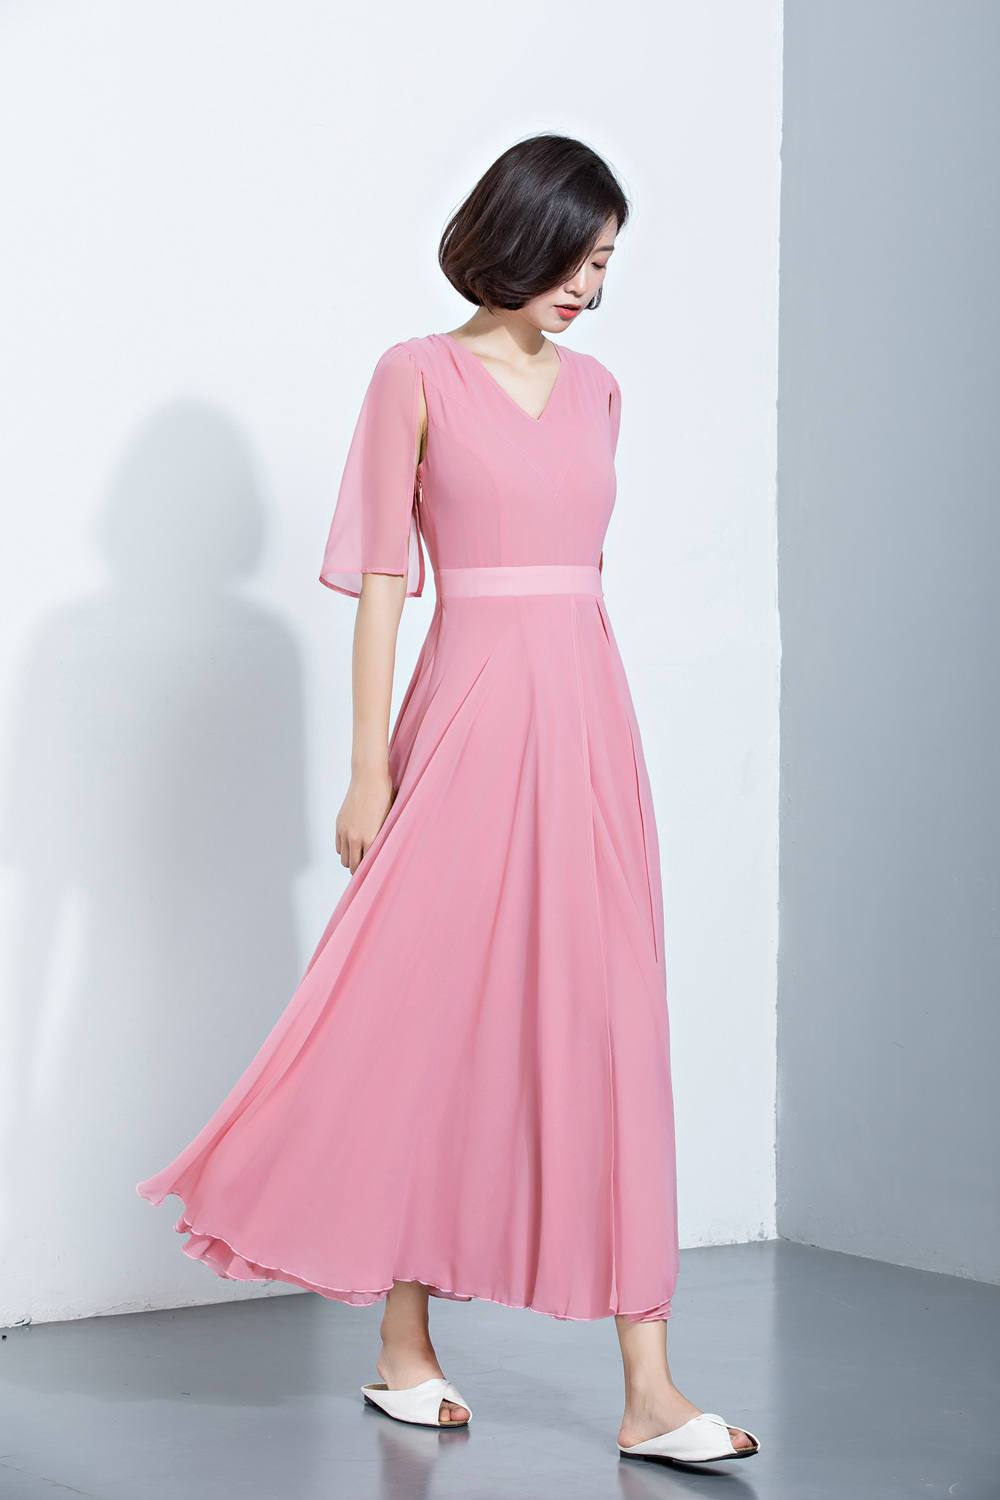 summer chiffon high waist elegant long bridesmaid dress C1143